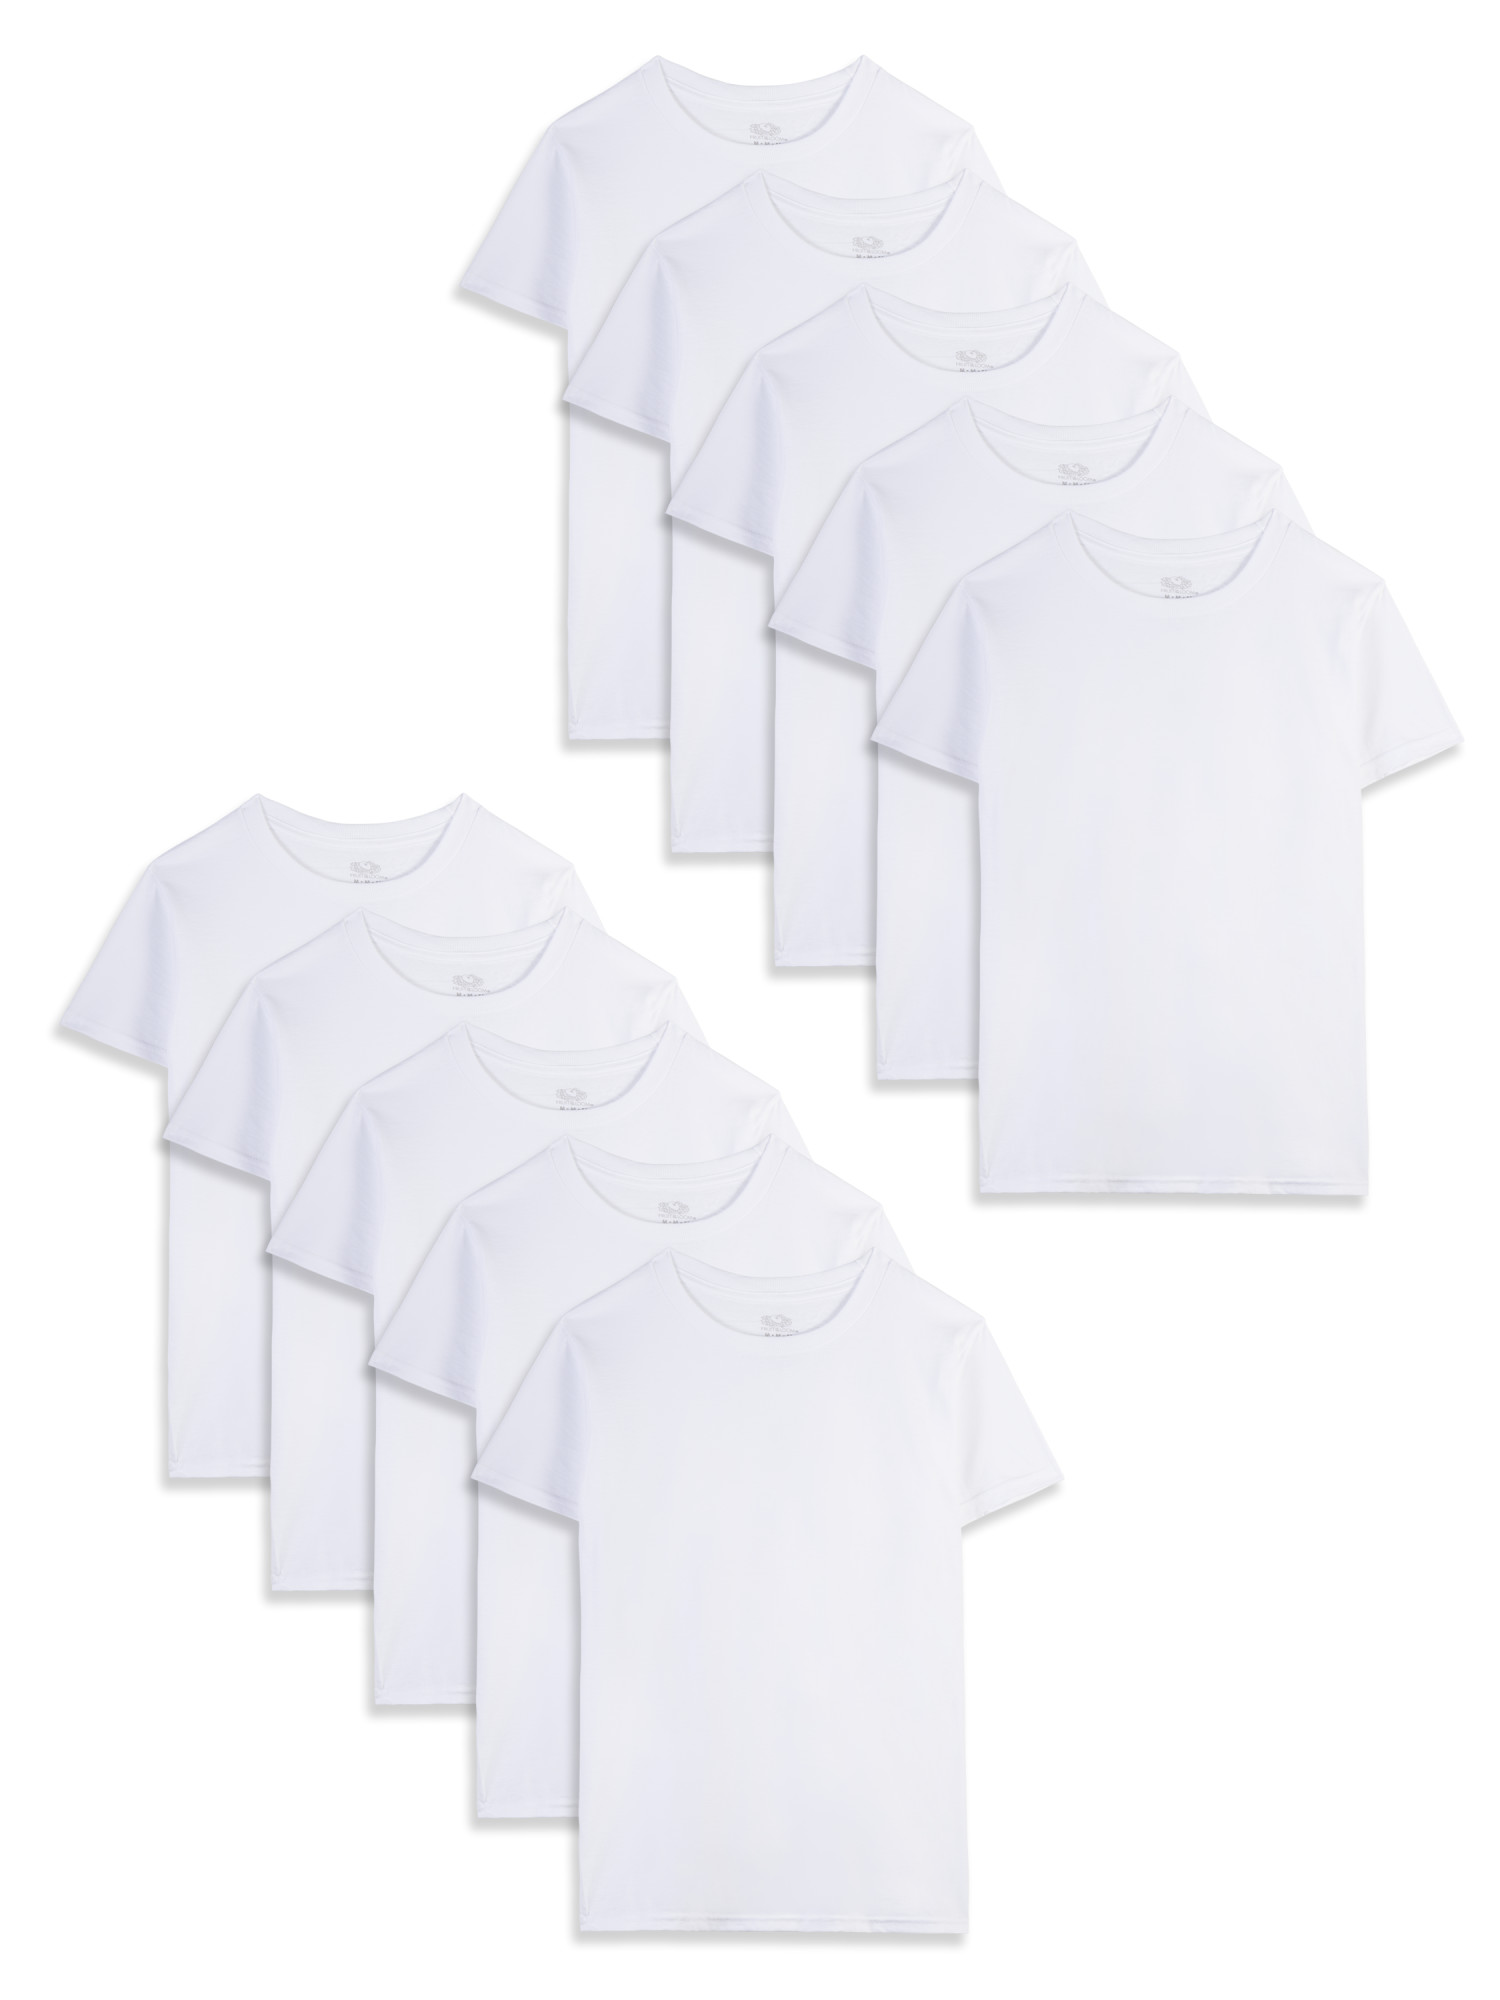 Fruit of the Loom Boys' White Crew Undershirts, 10 Pack - image 1 of 8